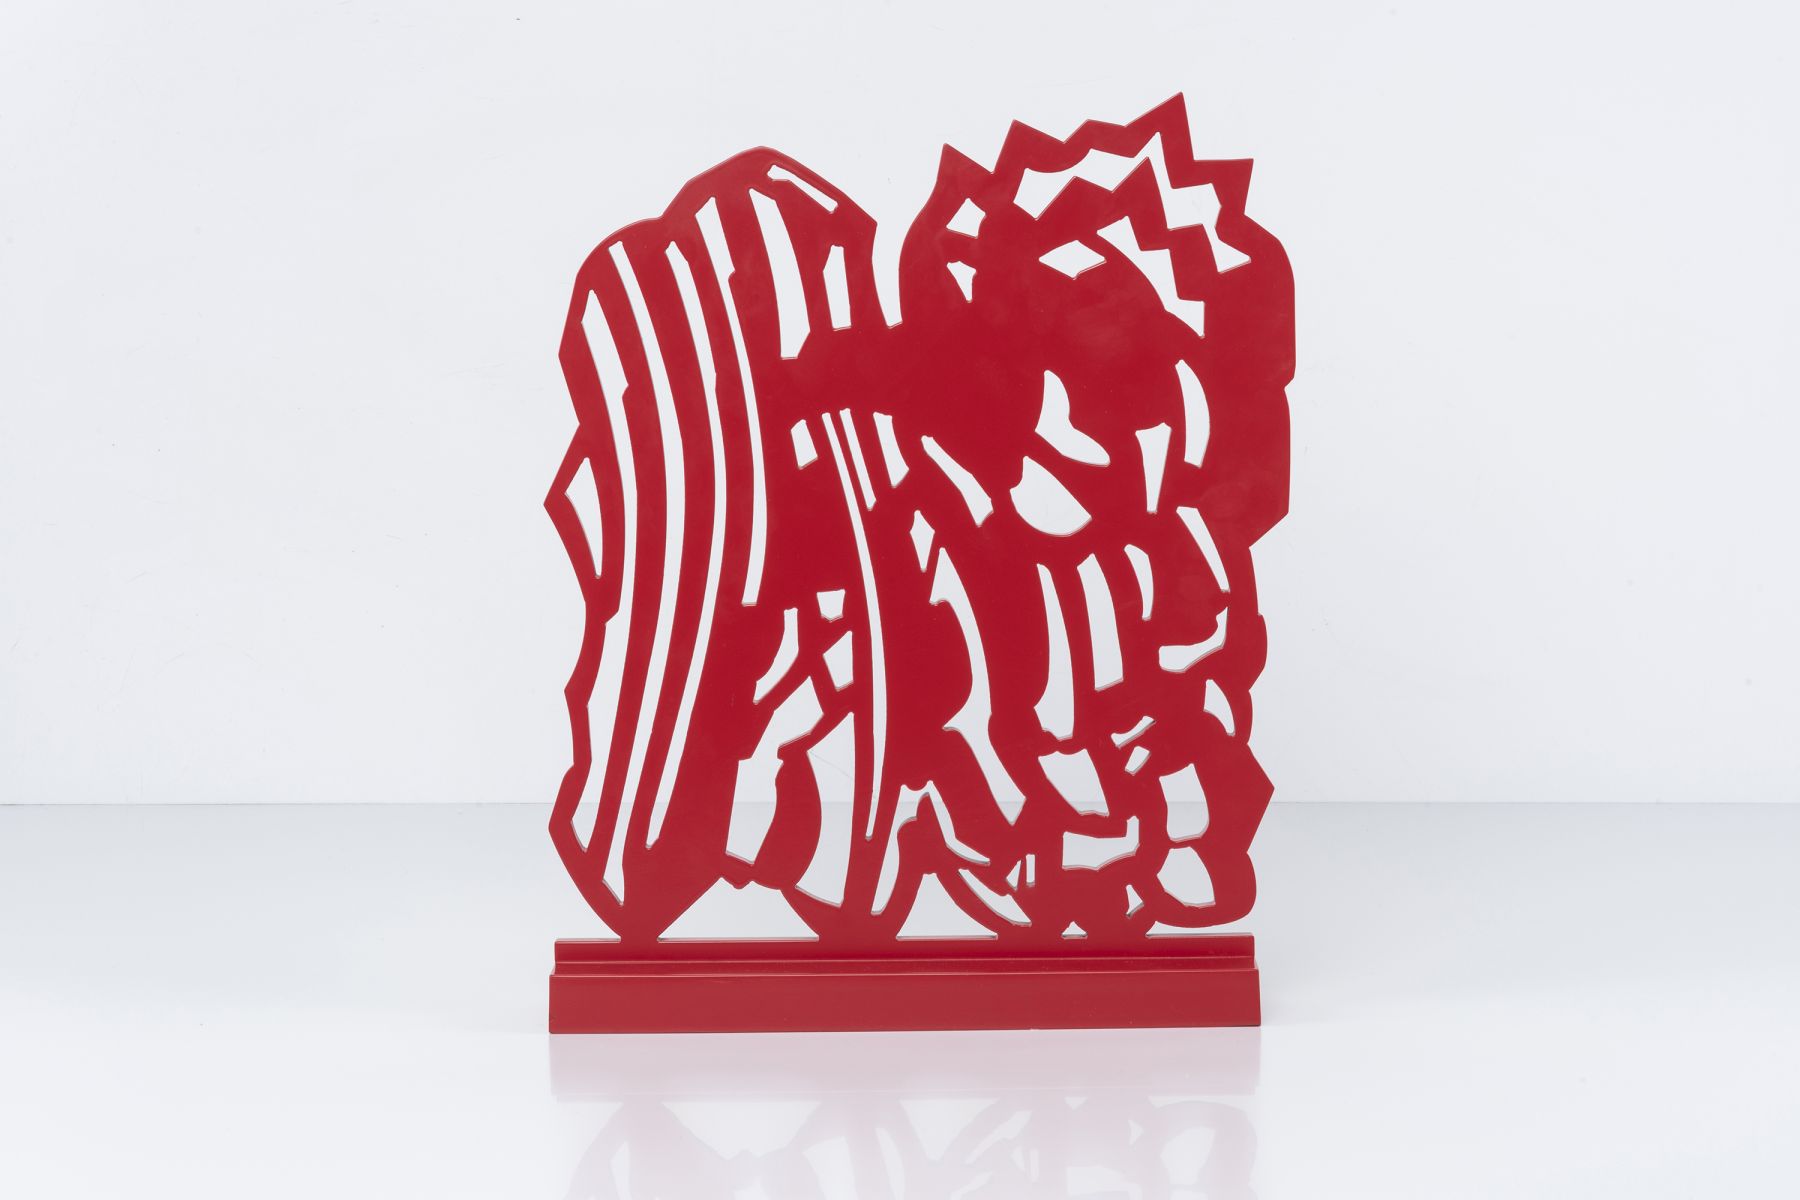 'Ferro rosso' sculpture Pietro Consagra pic-1